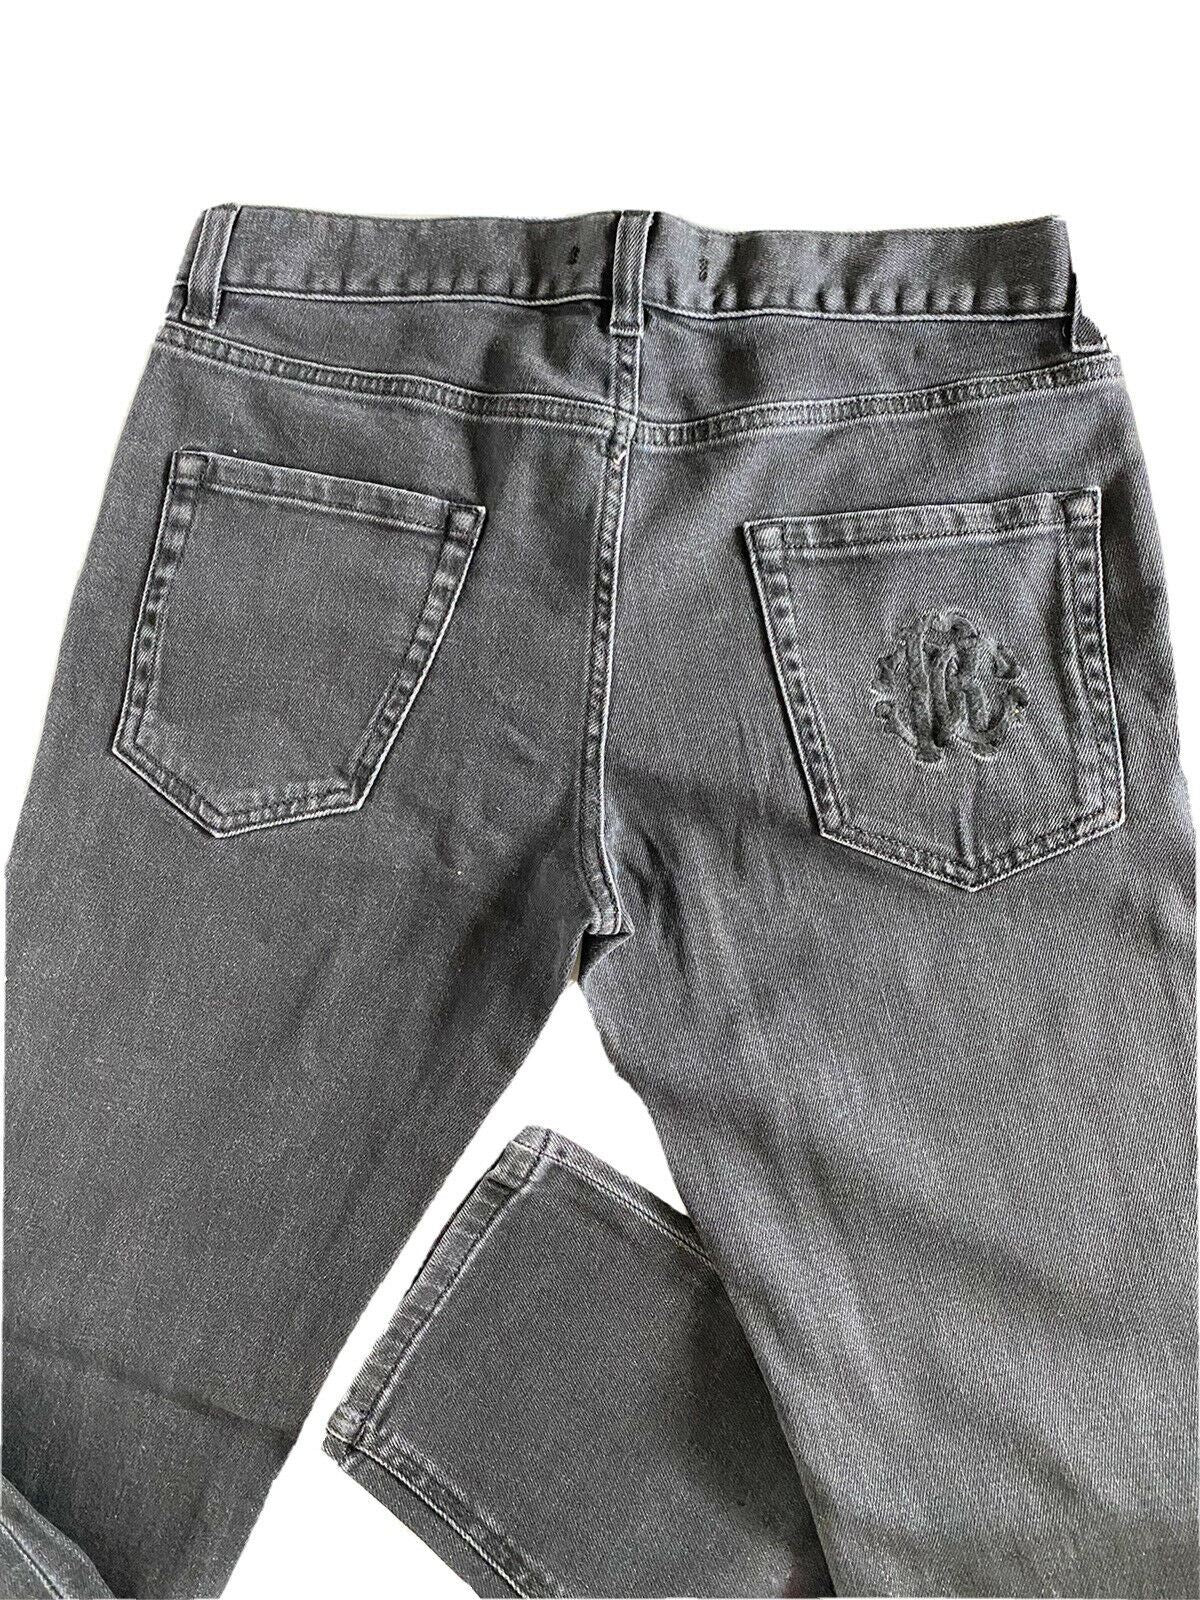 NWT $550 Roberto Cavalli Mens Gray Slim Fit Jeans Pants Size 32 US